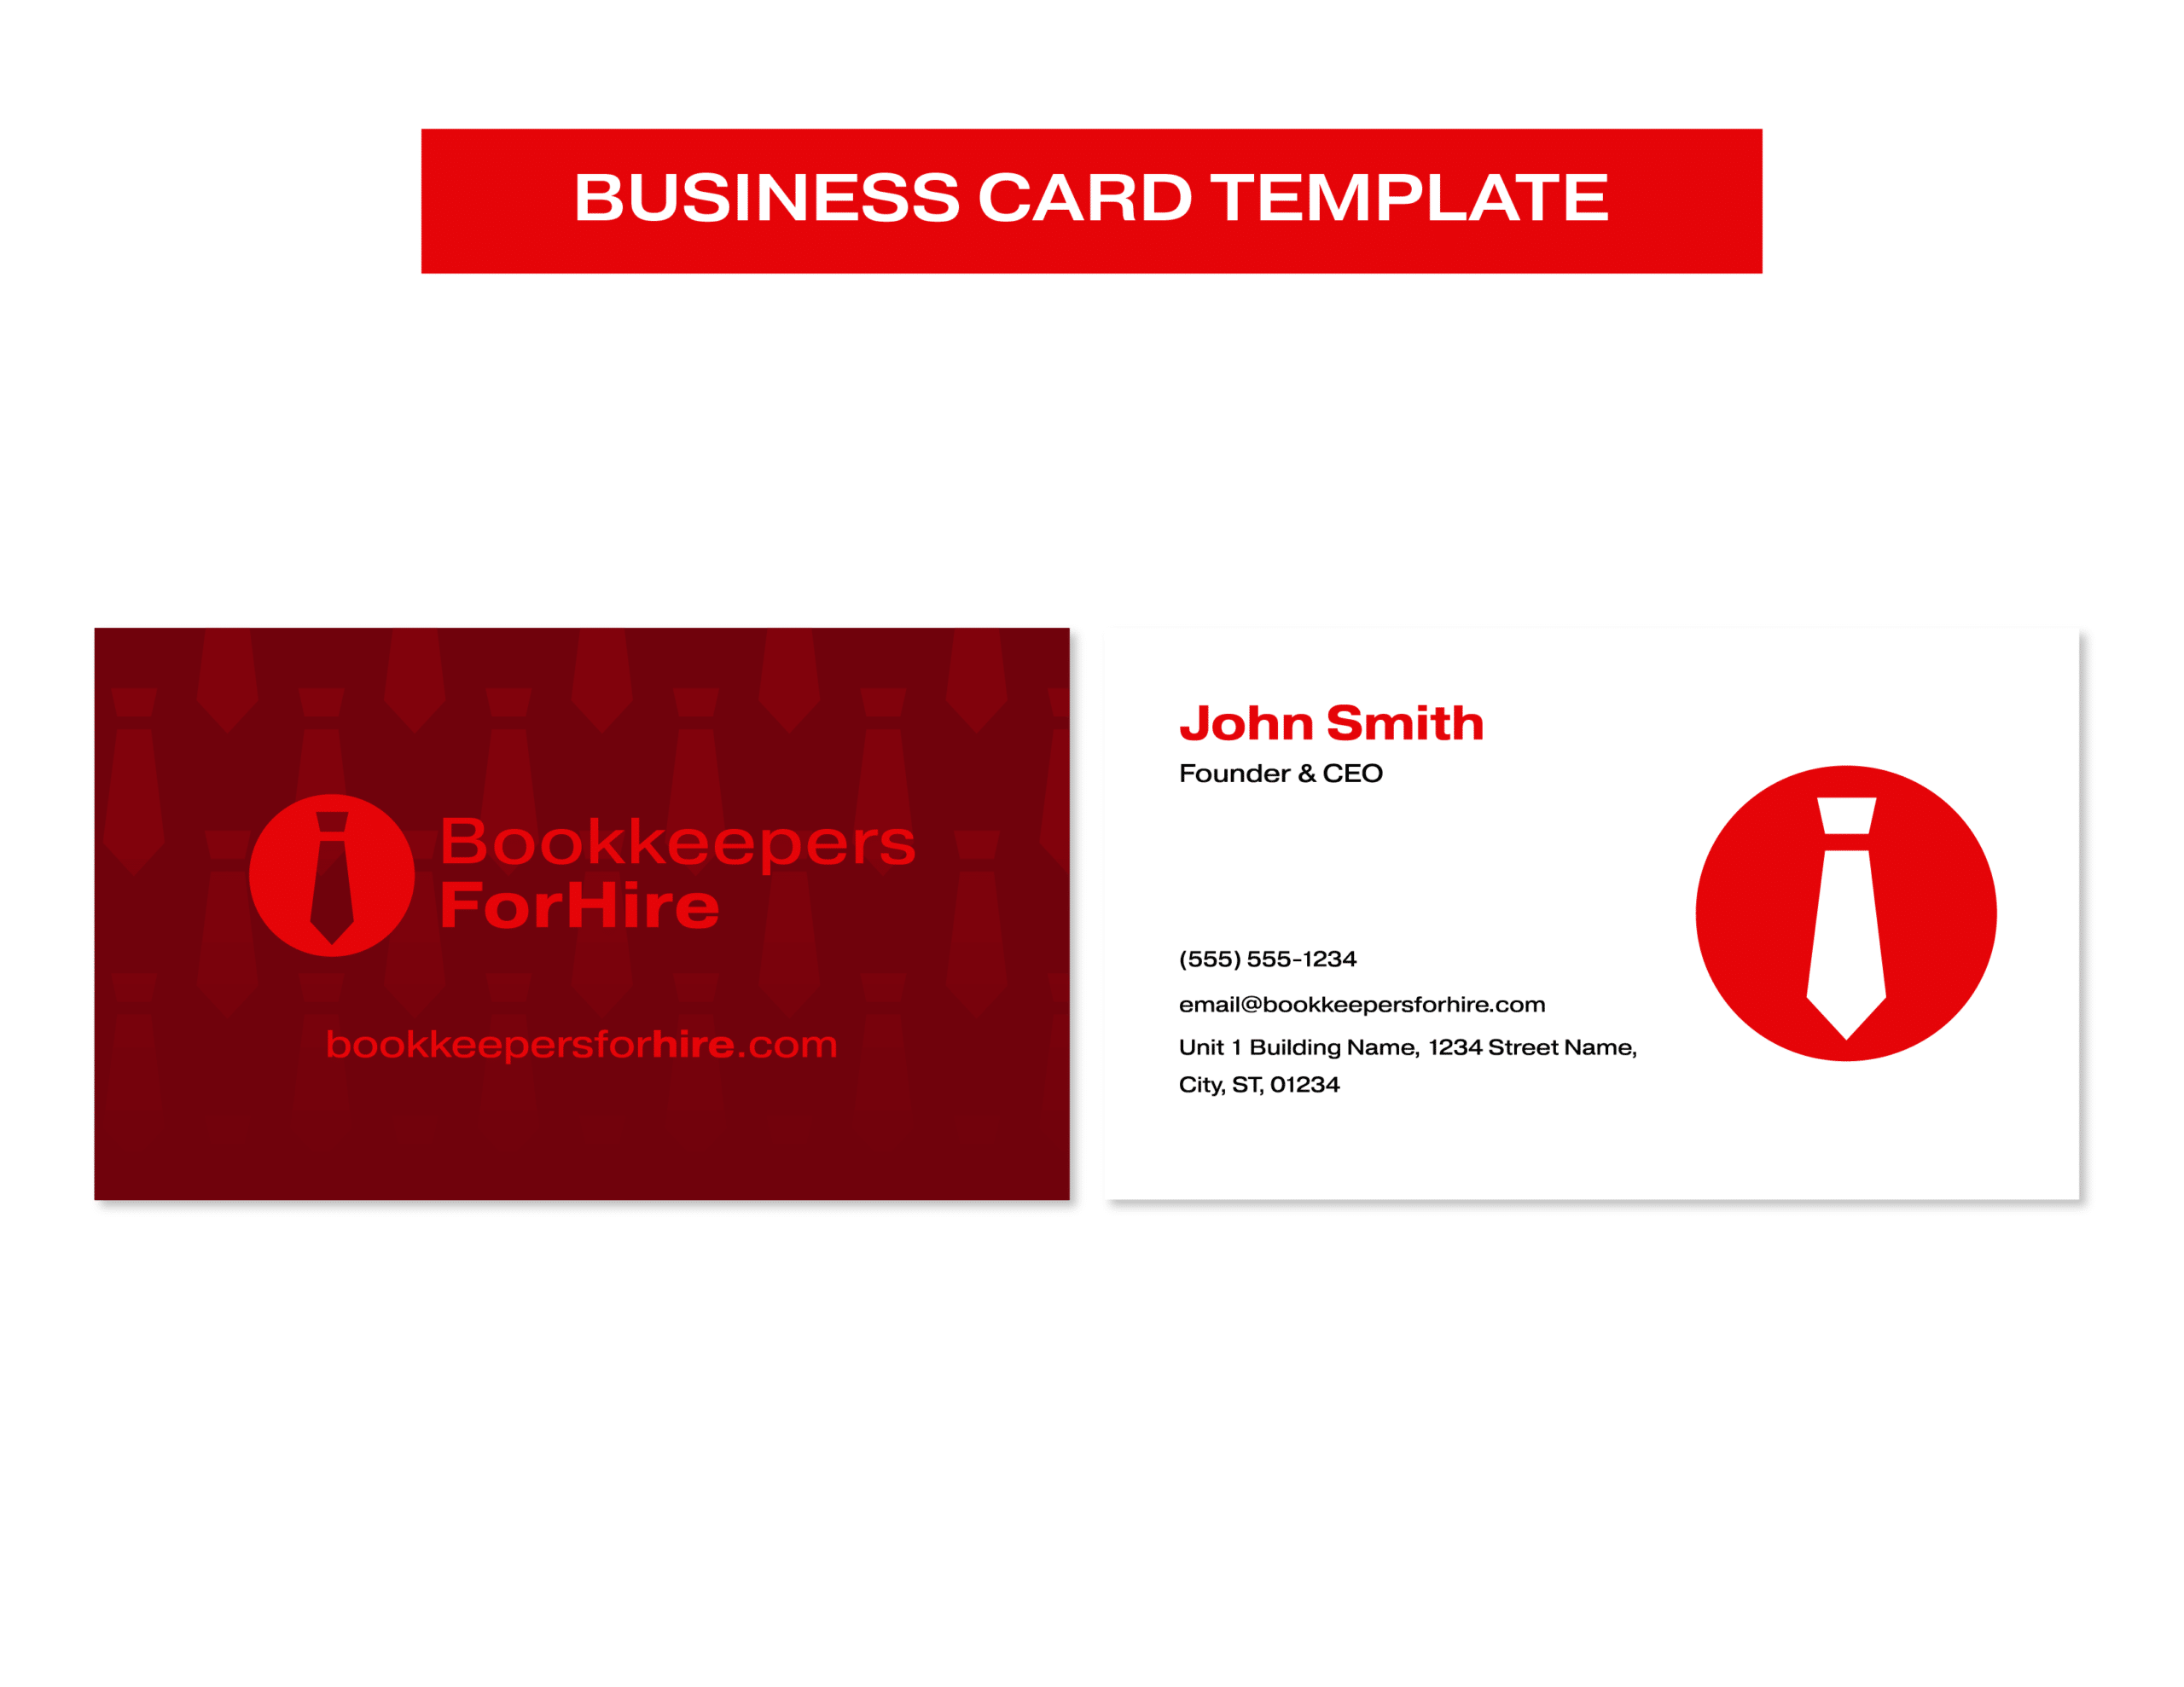 04BKForHire_Showcase_Business Card Template